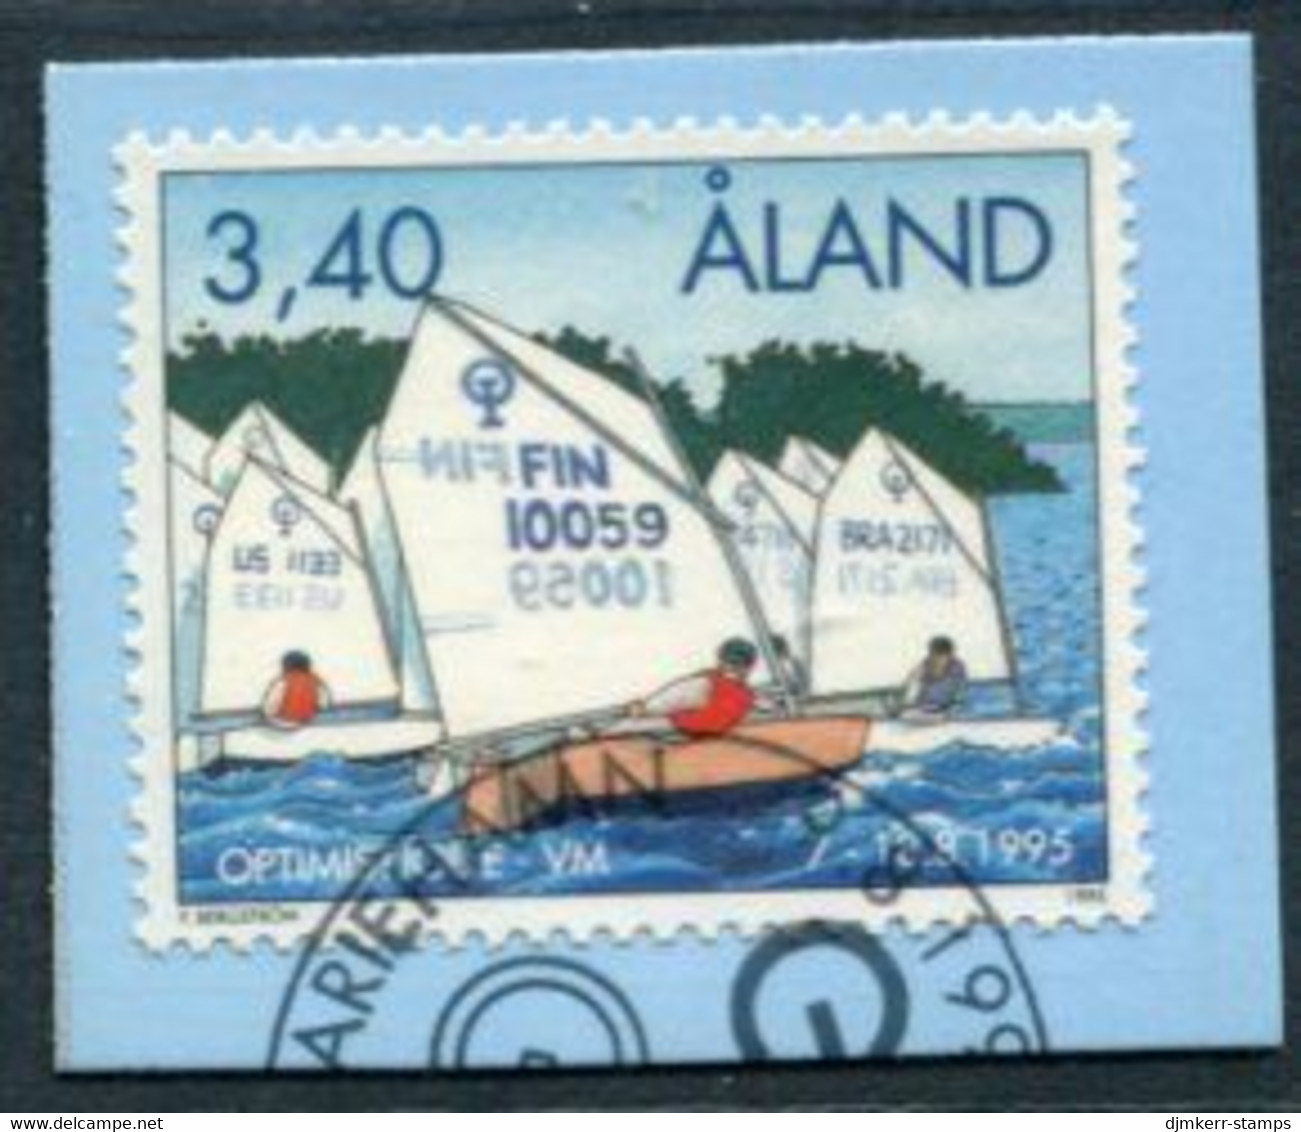 ALAND ISLANDS 1995 Optimist Class Sailing Championship Used.  Michel 104 - Ålandinseln